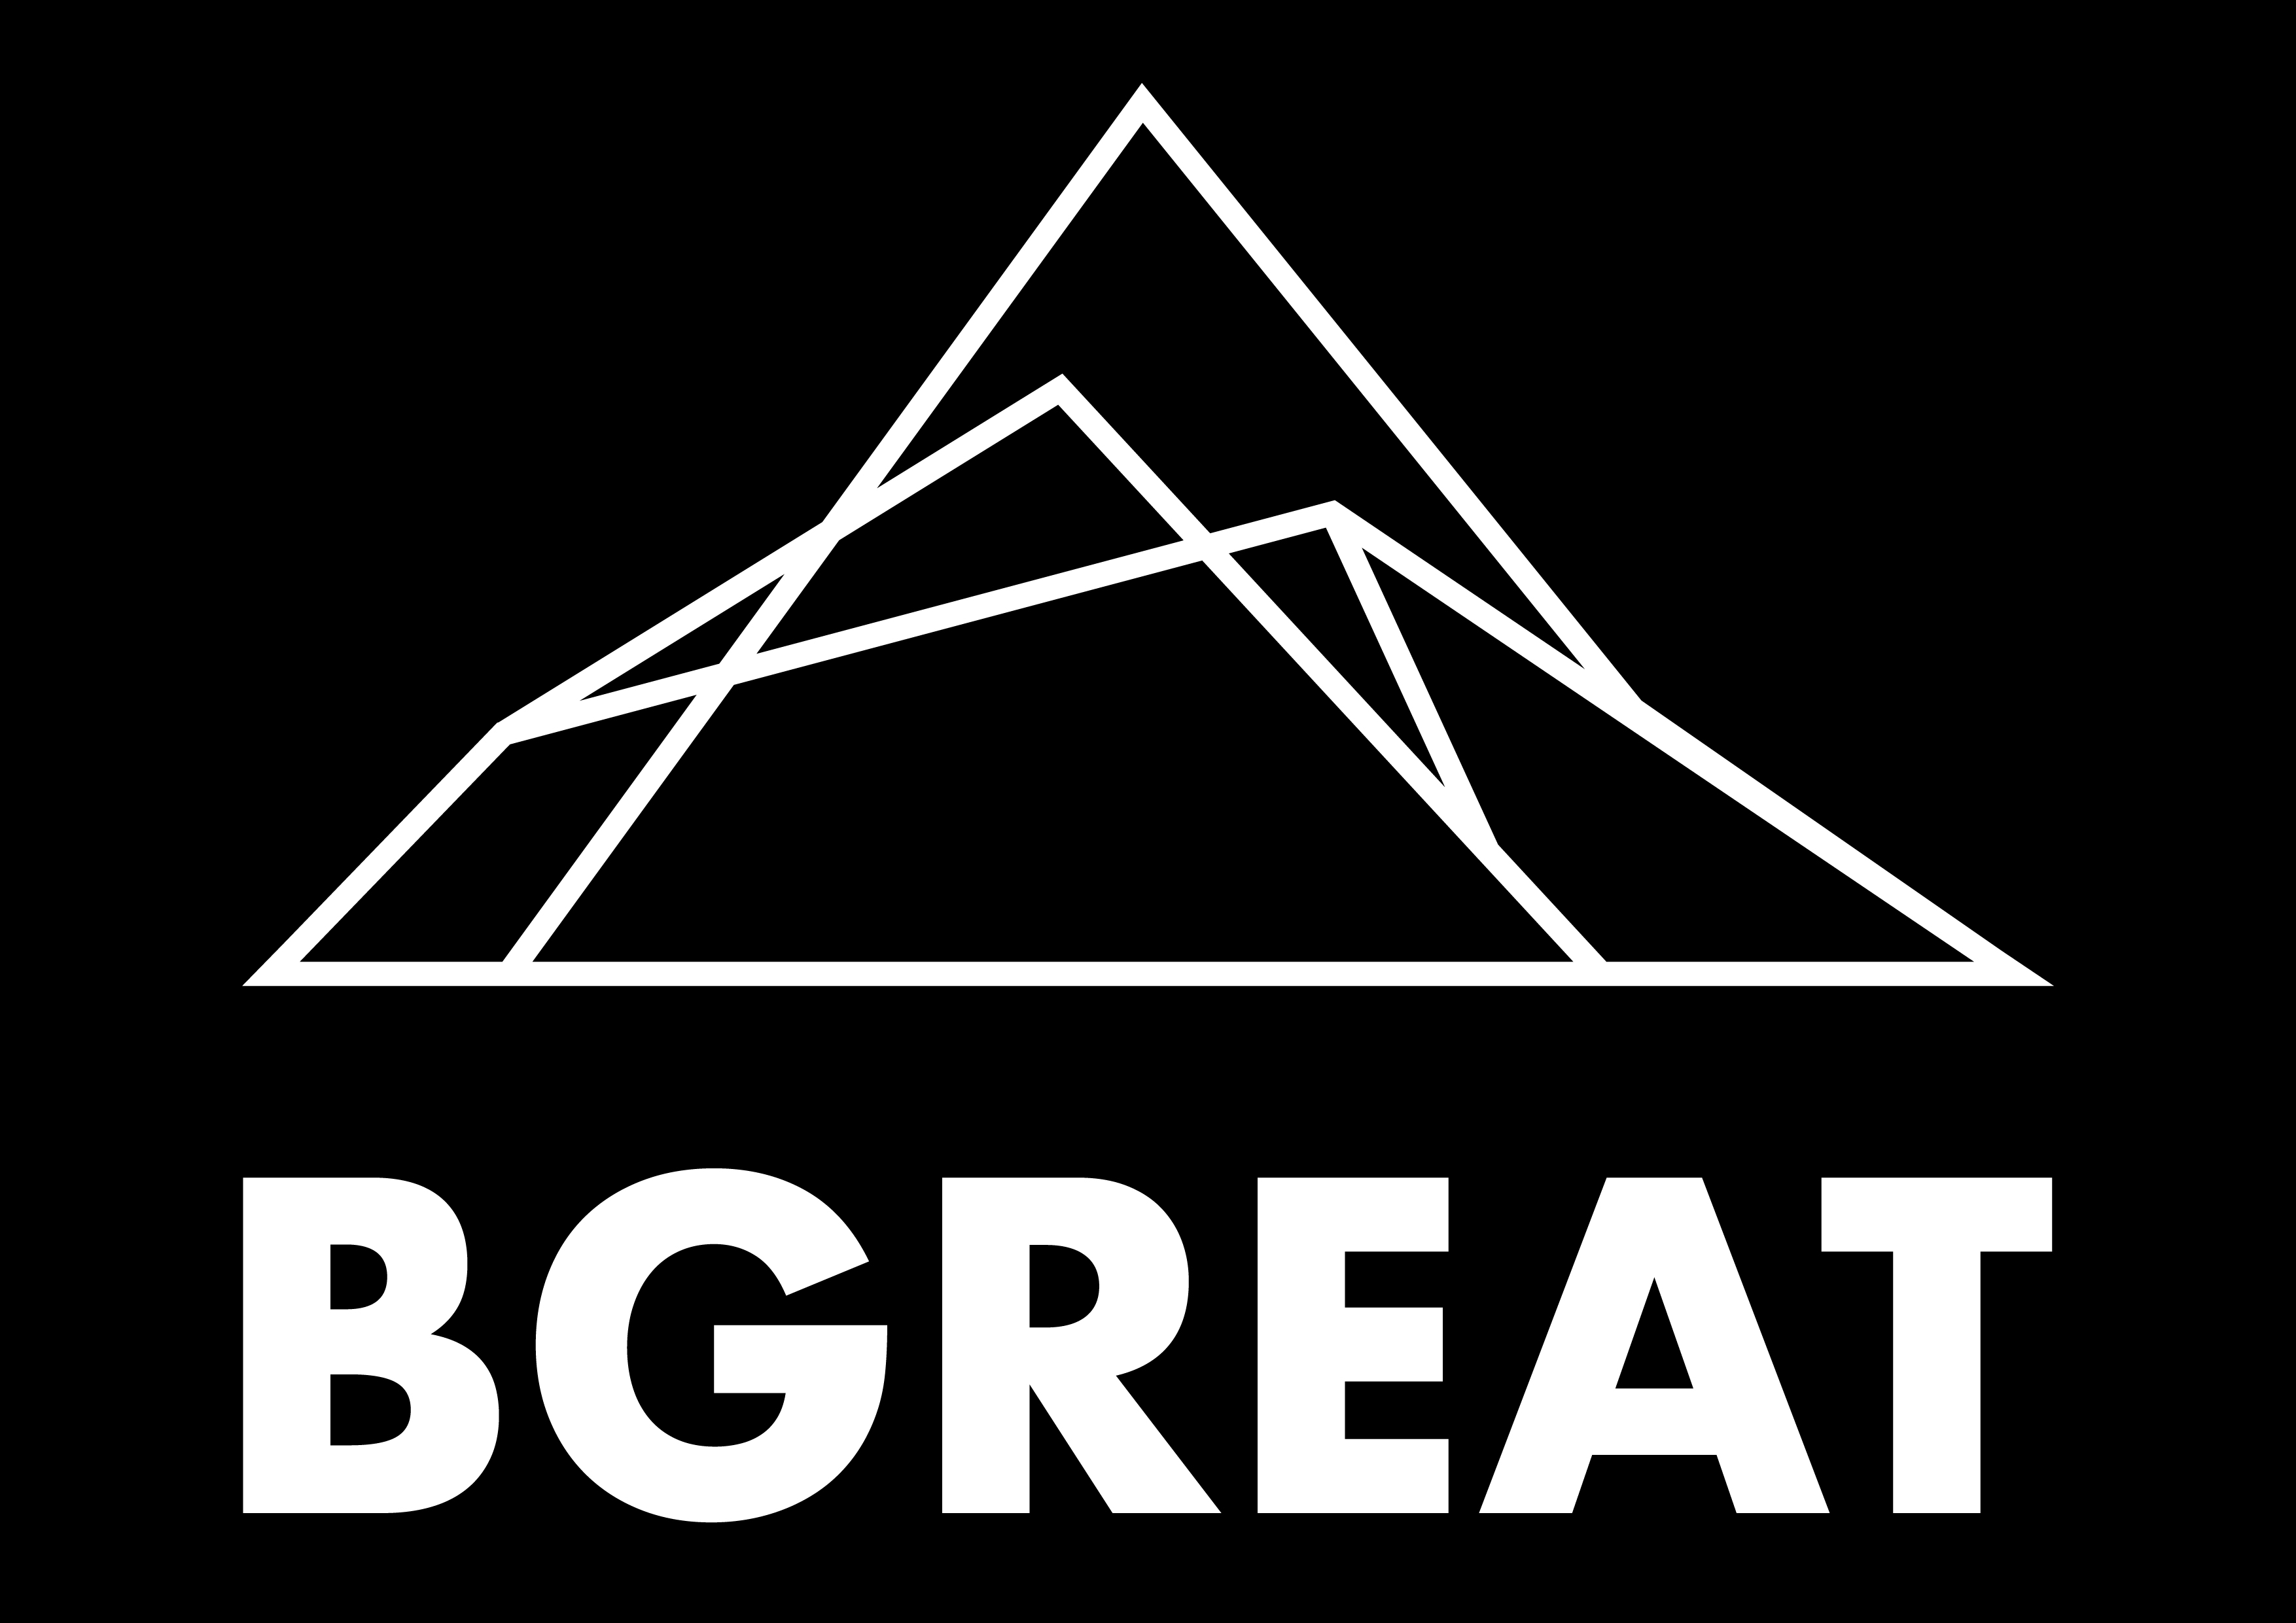 bgreat logo